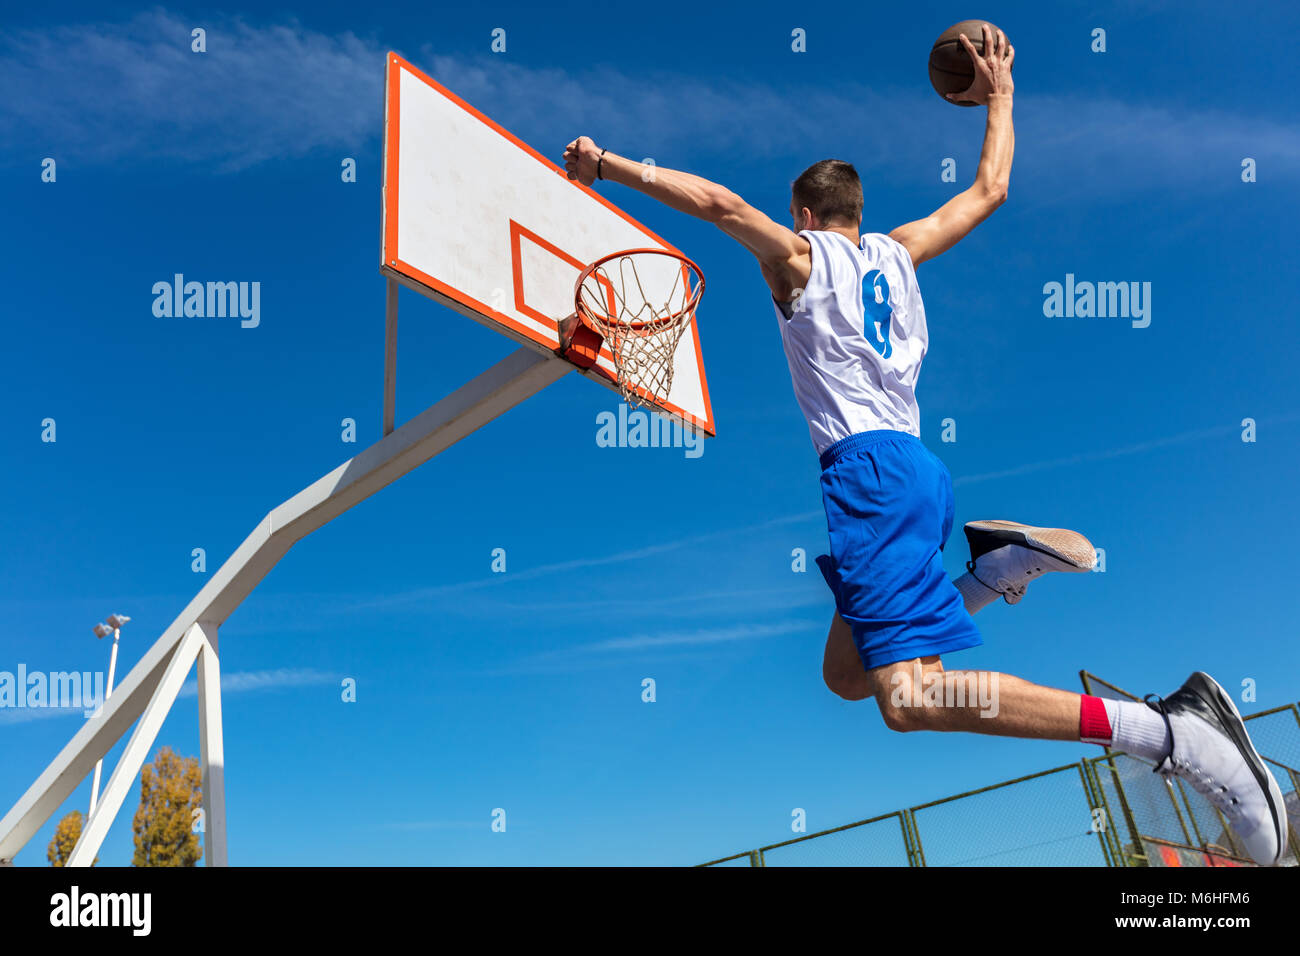 Young Basketball street player making slam dunk Stock Photo